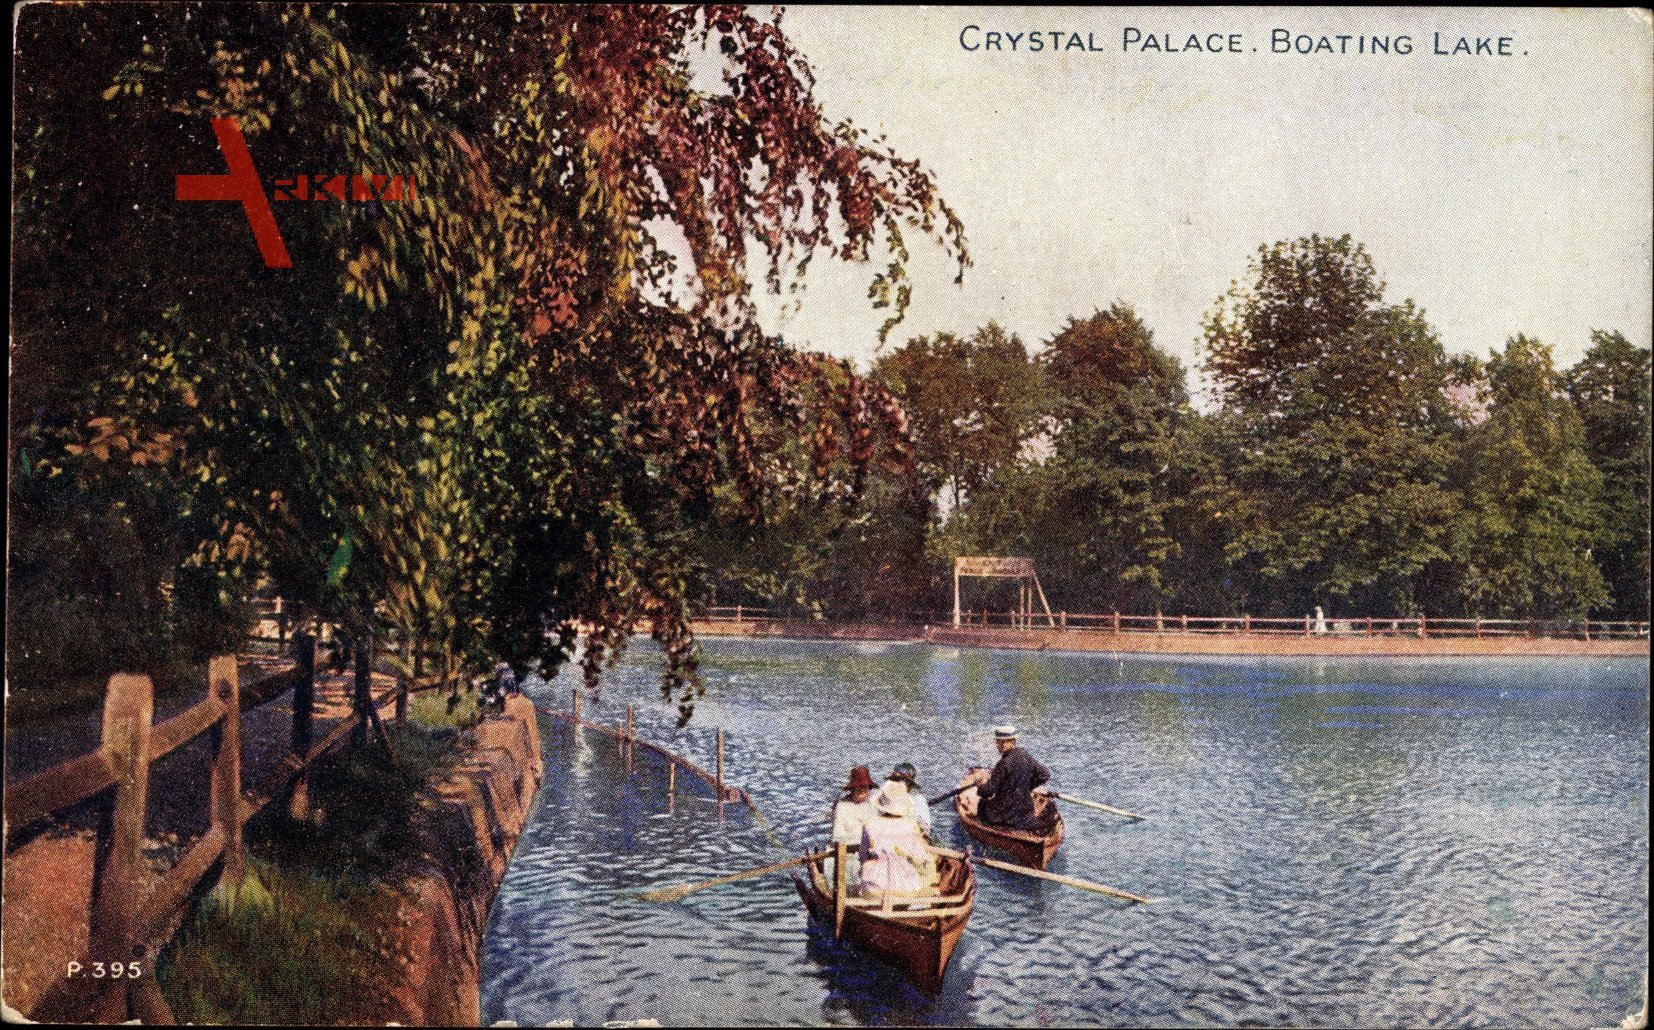 London City, Crystal Palace, Boating Lake, Ruderboote